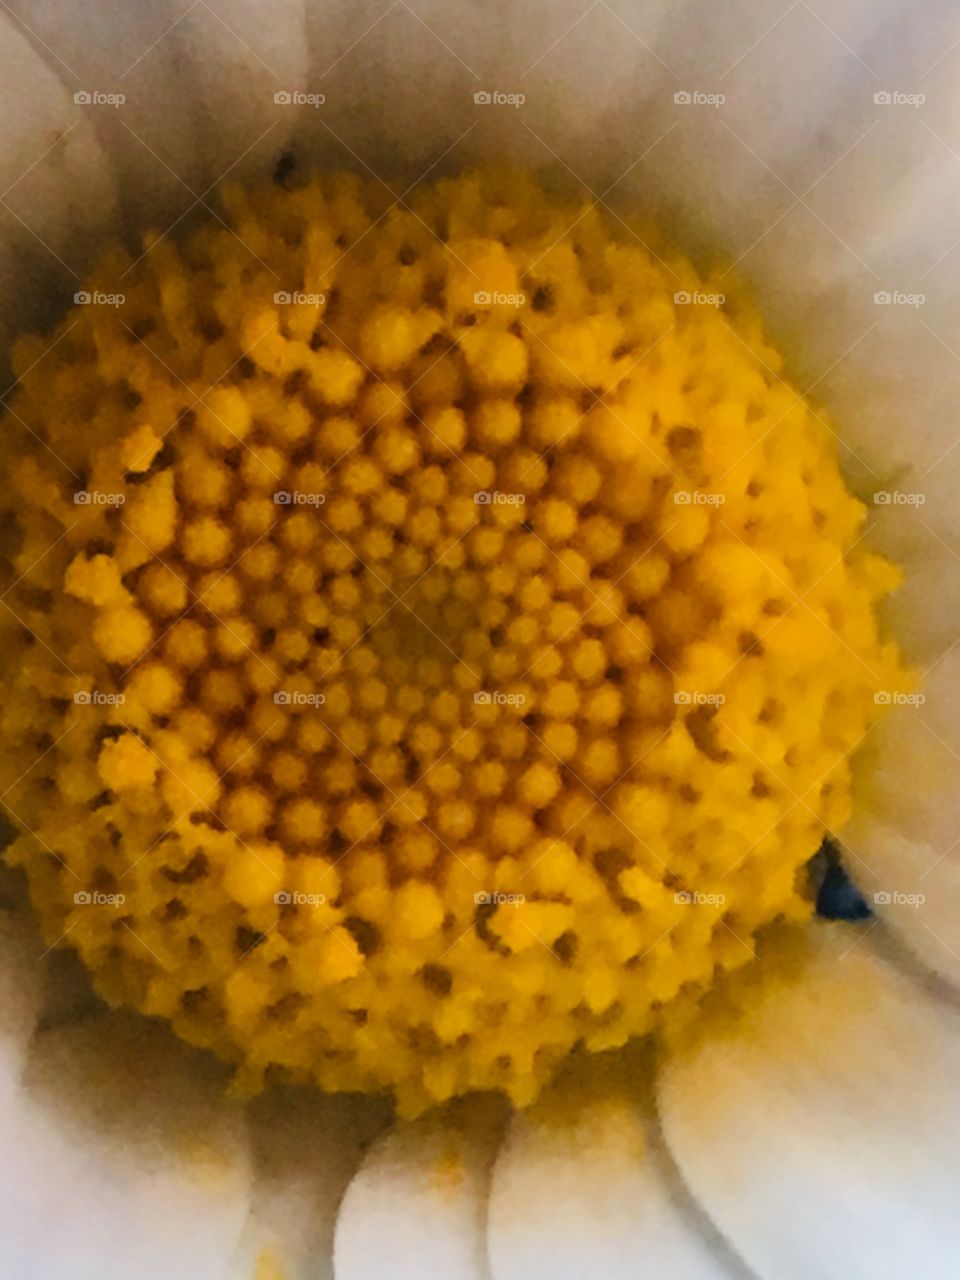 Pollen 